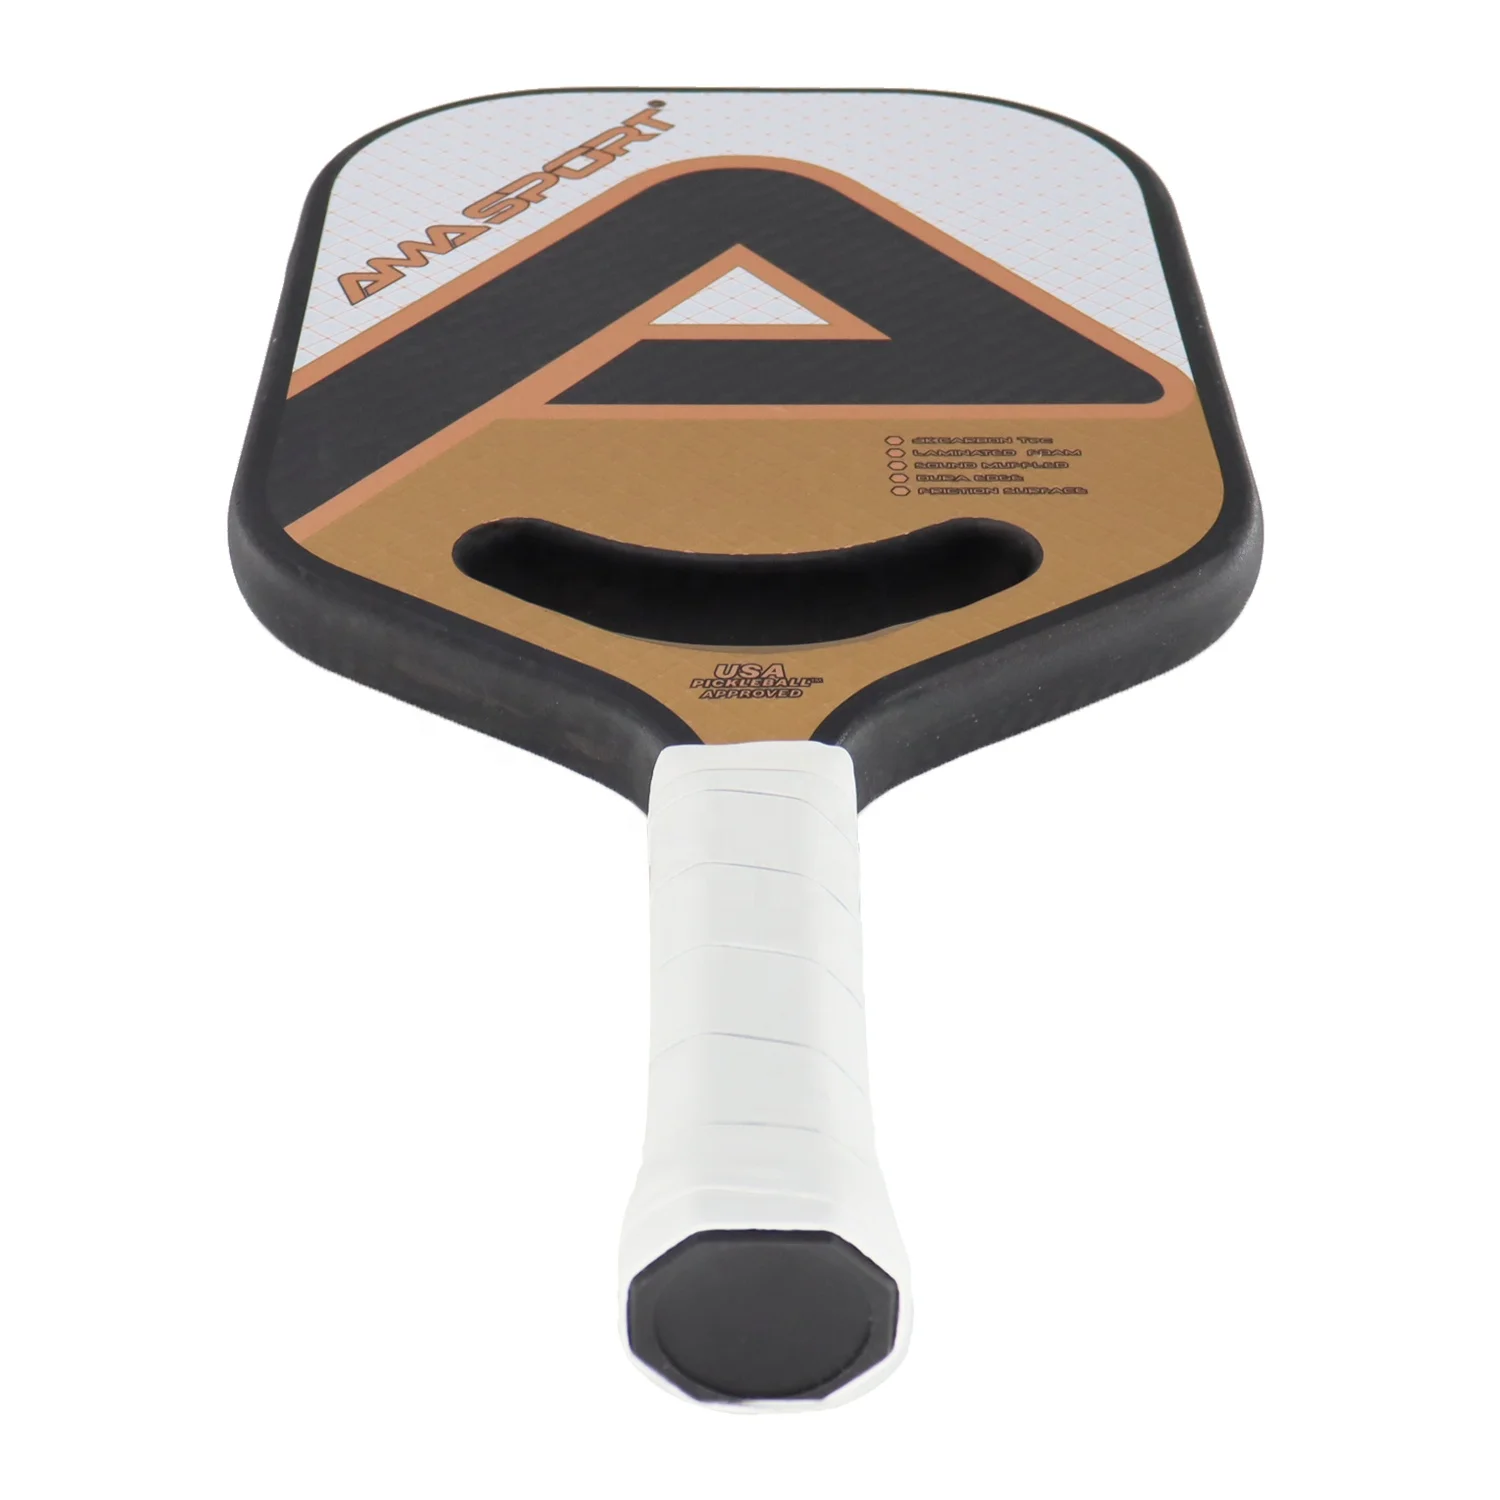 

Custom T700 Carbon Air Dynamic Throat Pickleball Paddle Racket